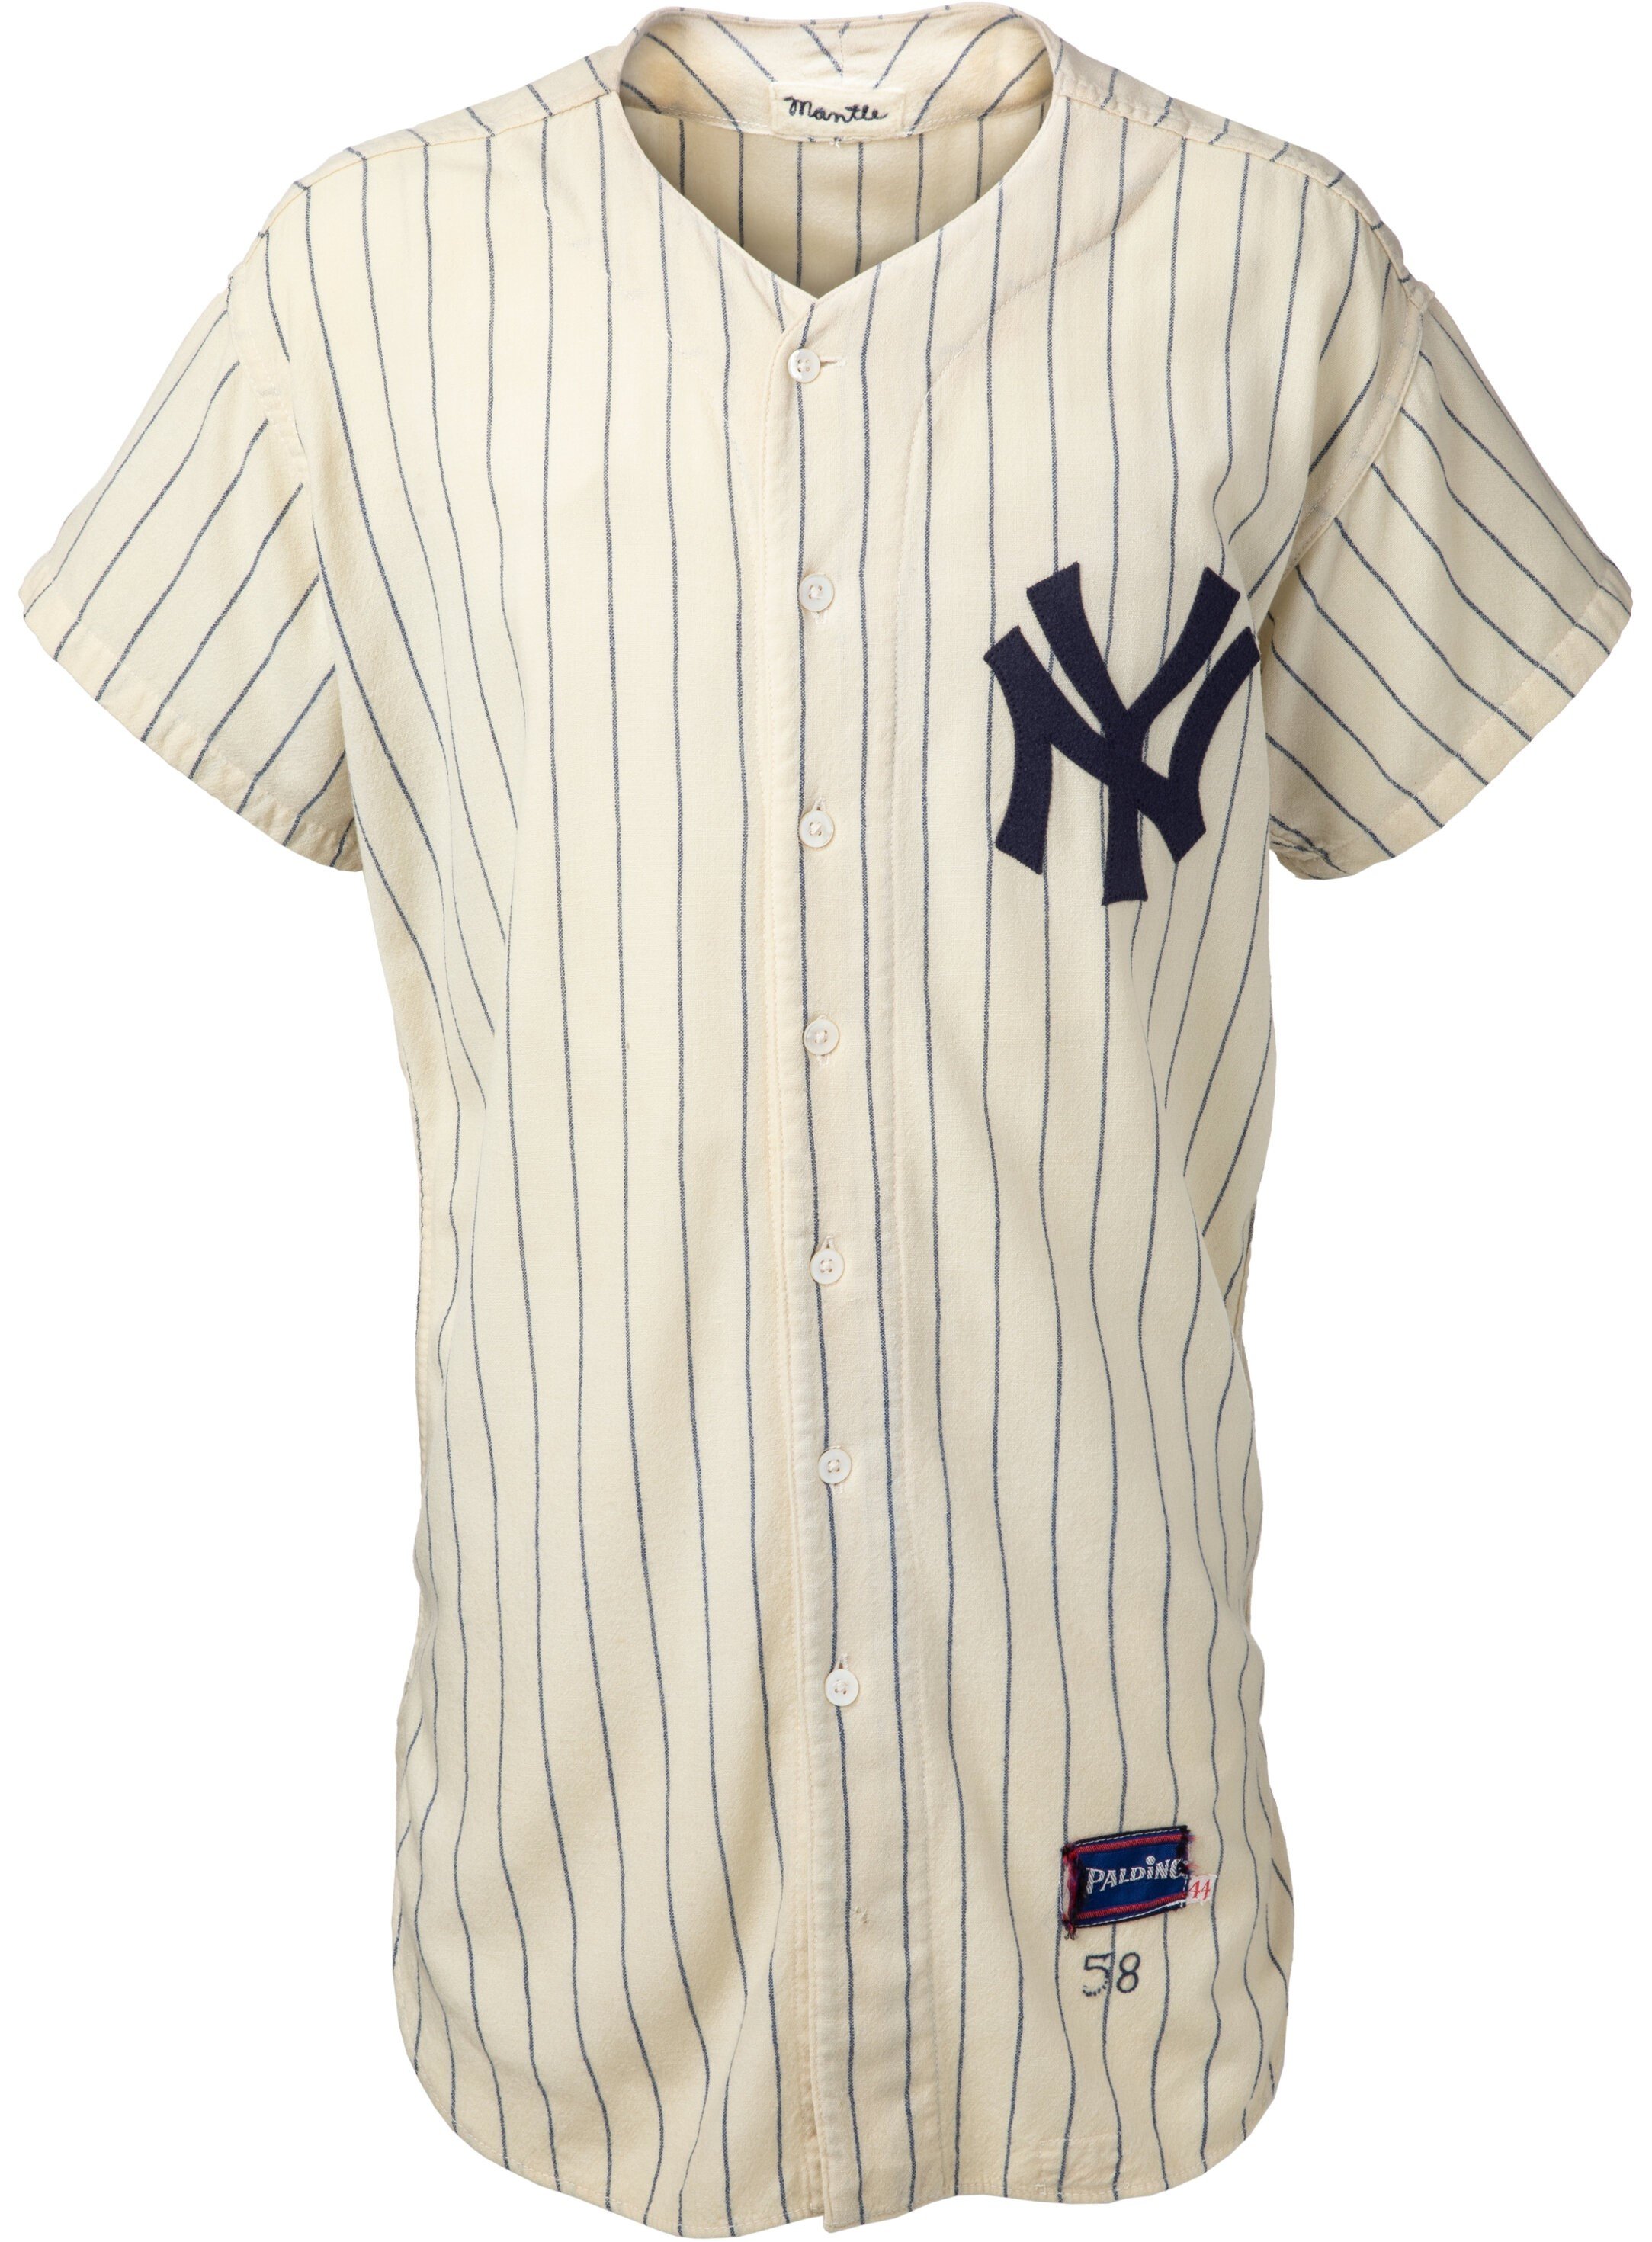 Joe DiMaggio '5' Yankees Vintage 'Thank You Lord' Essential T